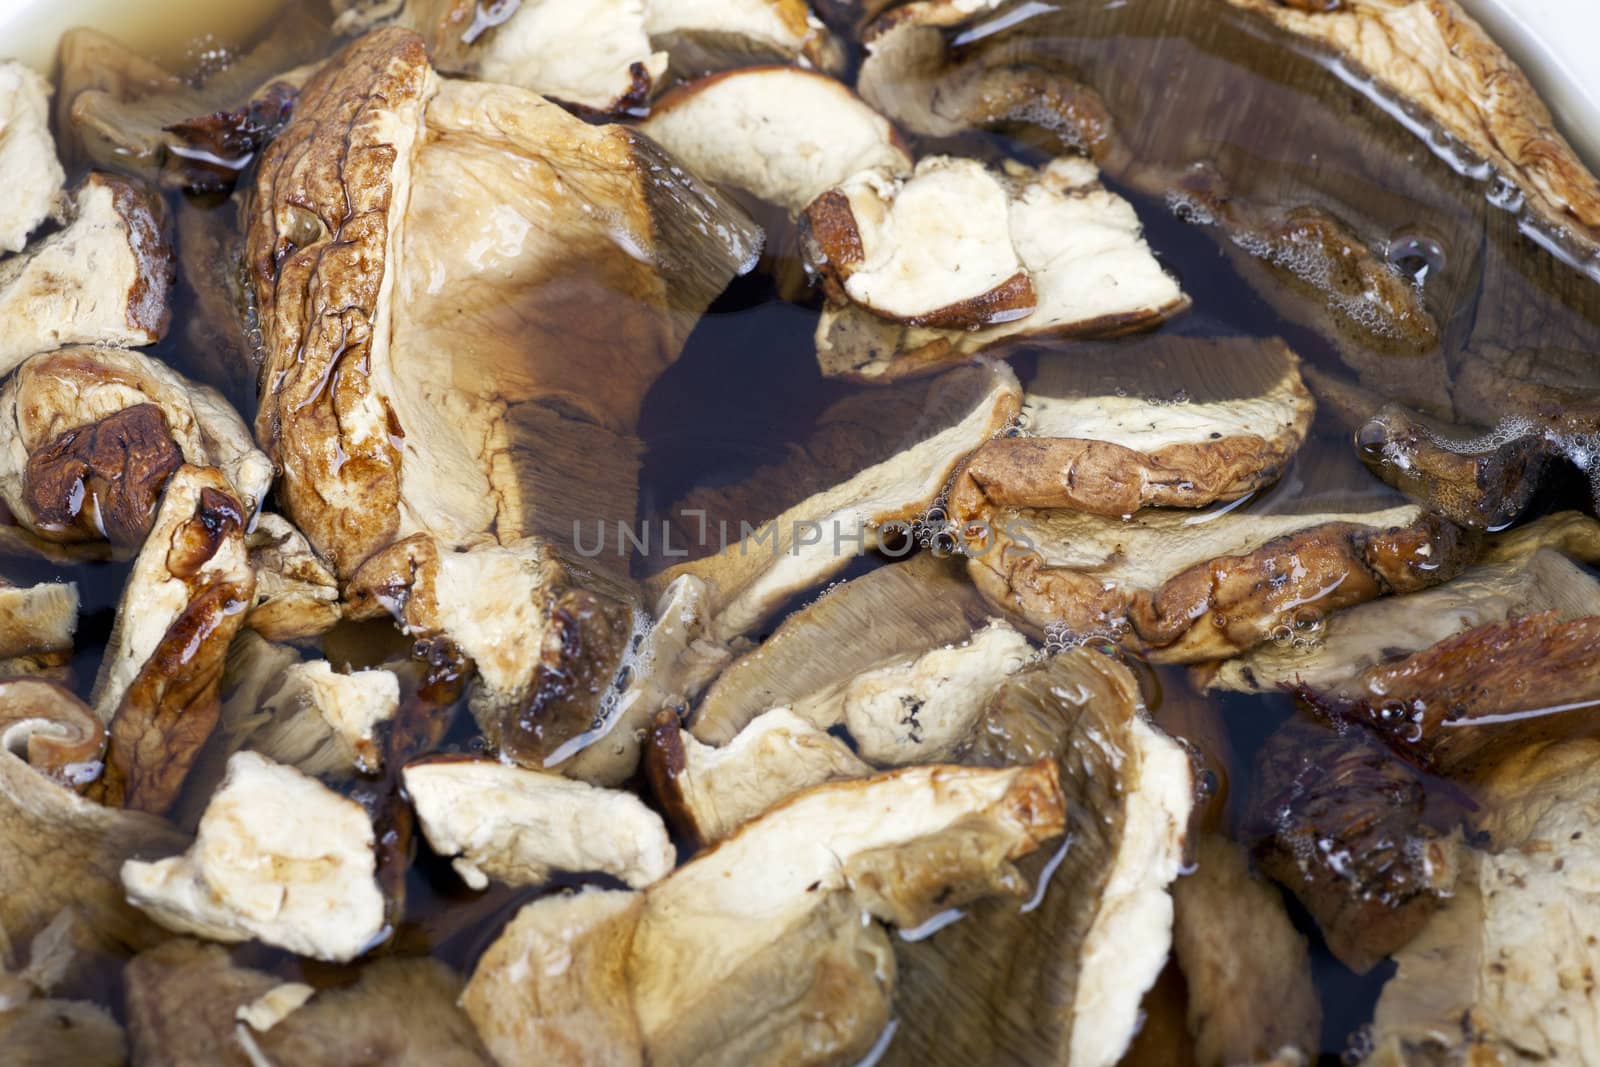 Dried mushrooms soaking in warm water.